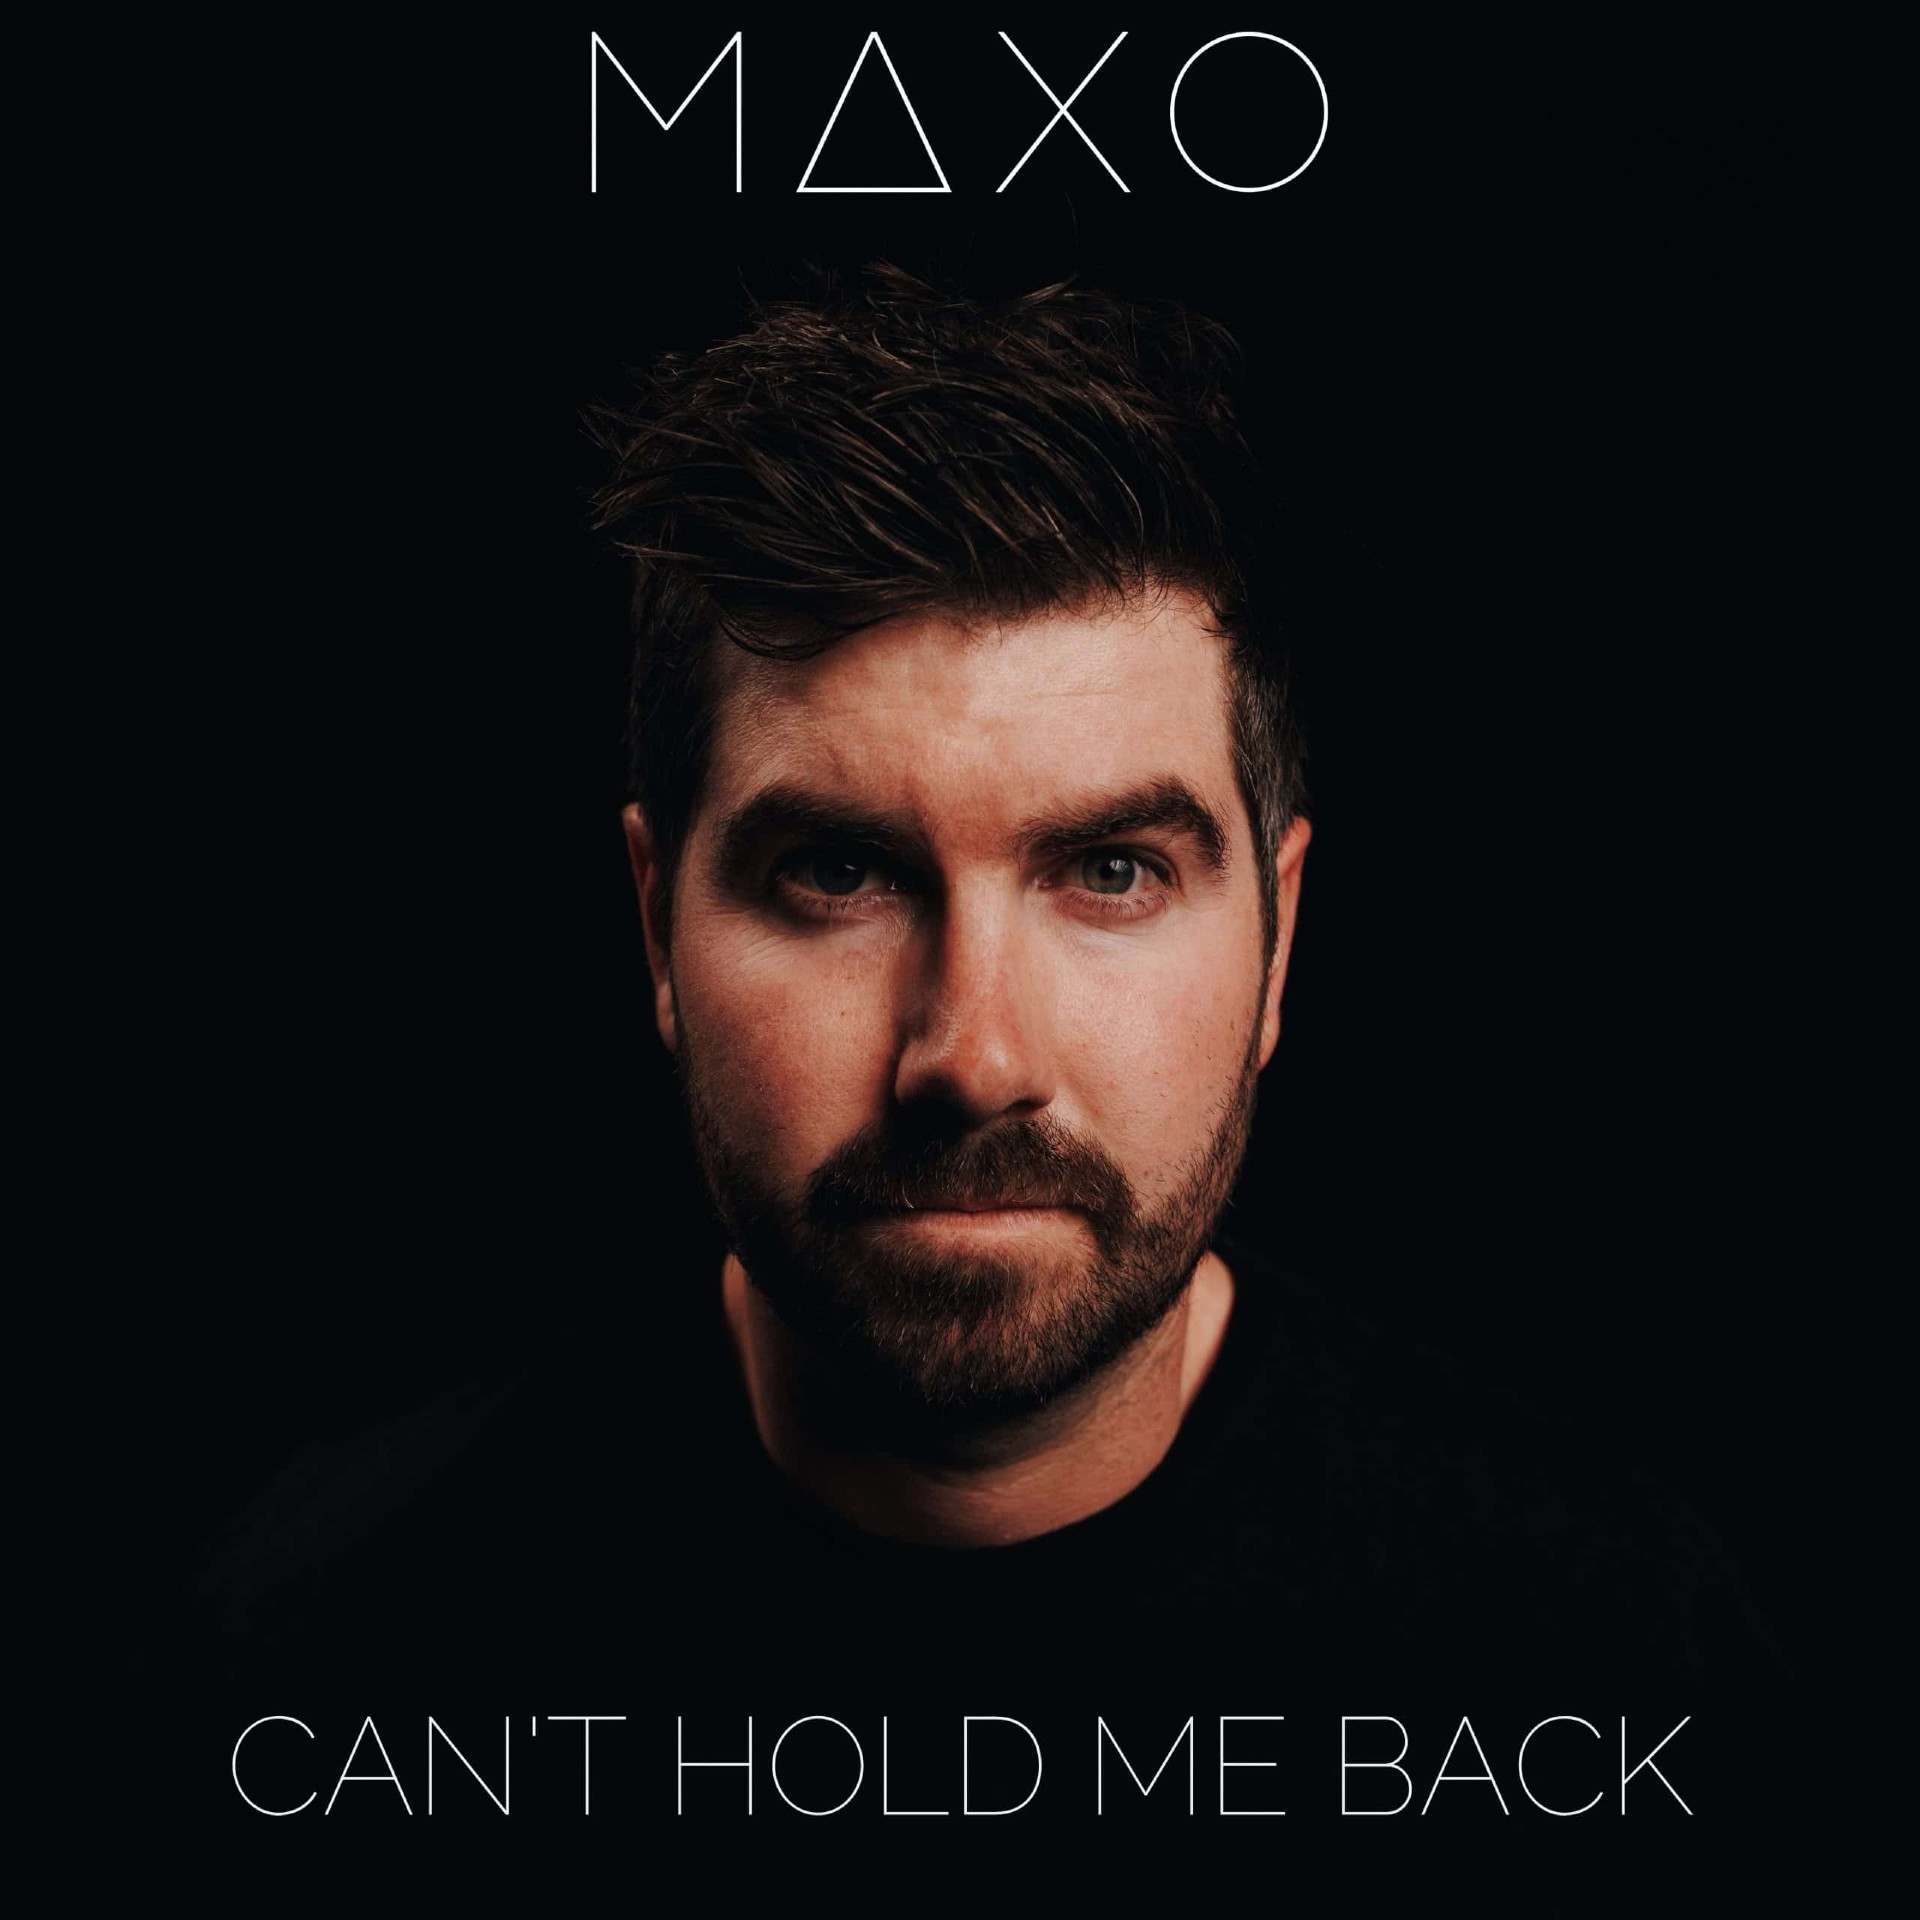 MAXO “Can’t Hold Me Back” single artwork